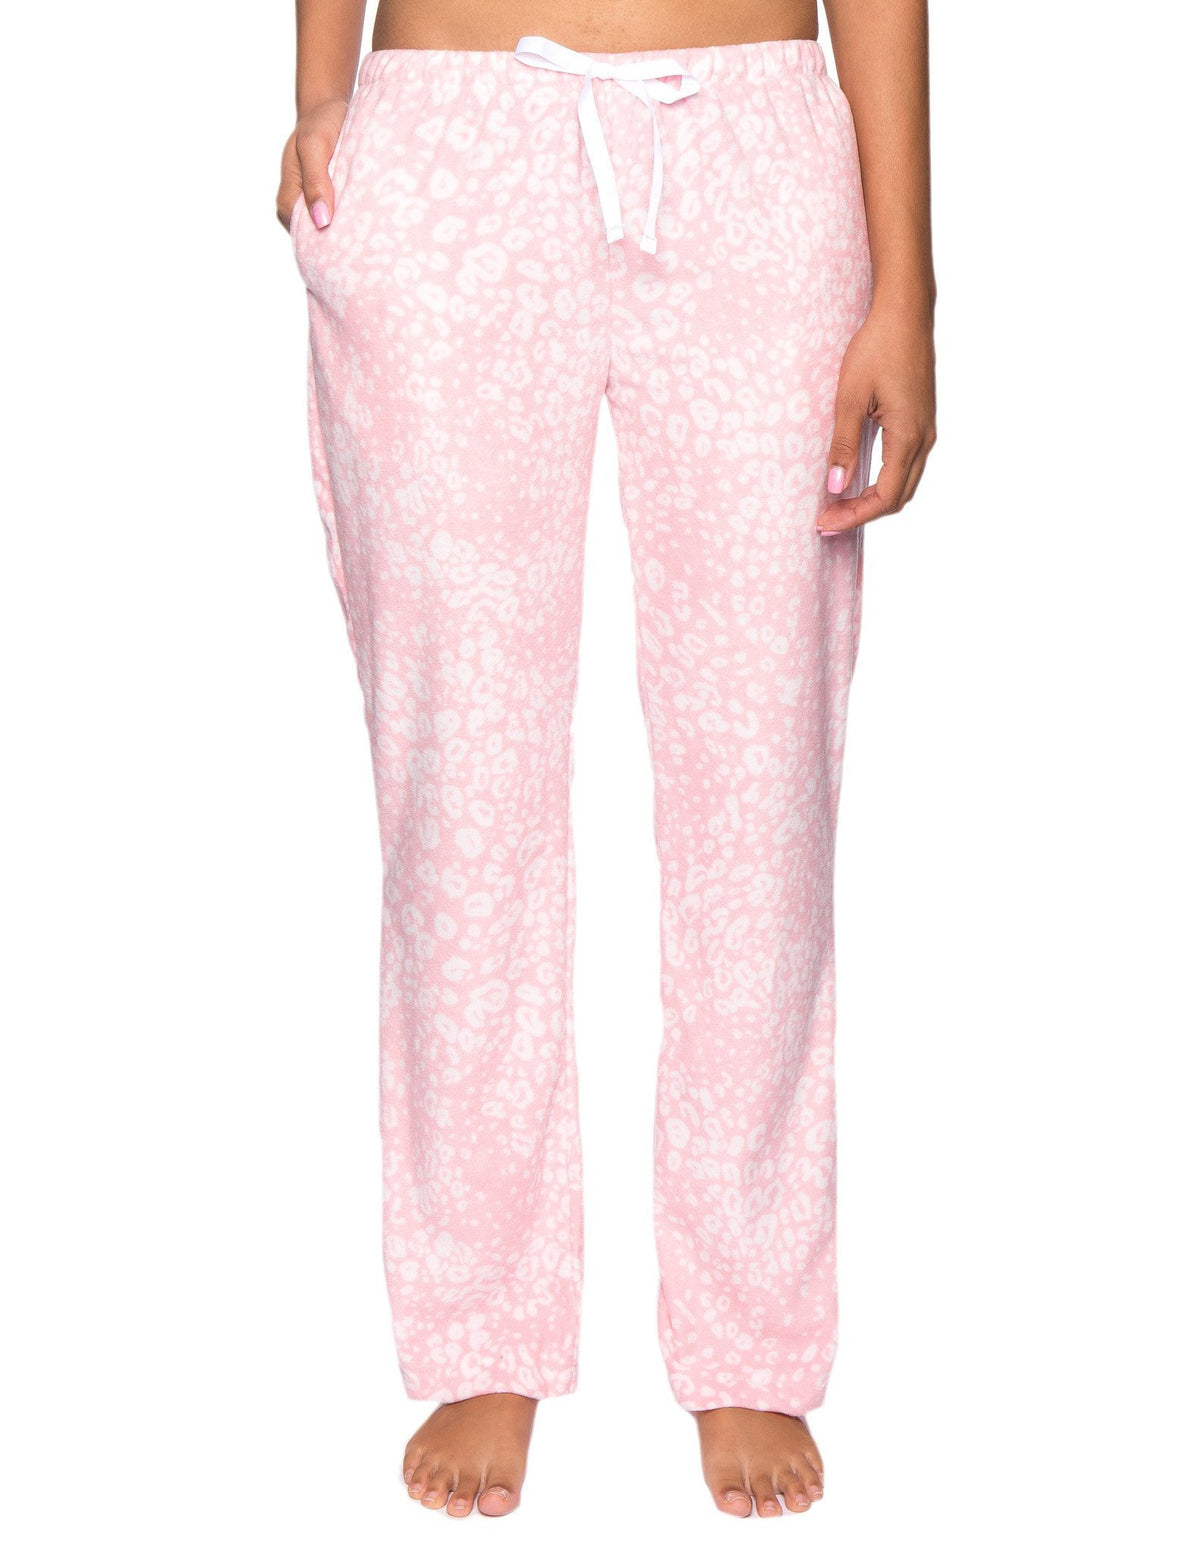 Women's Microfleece Lounge Pant - Leopard Pink/White